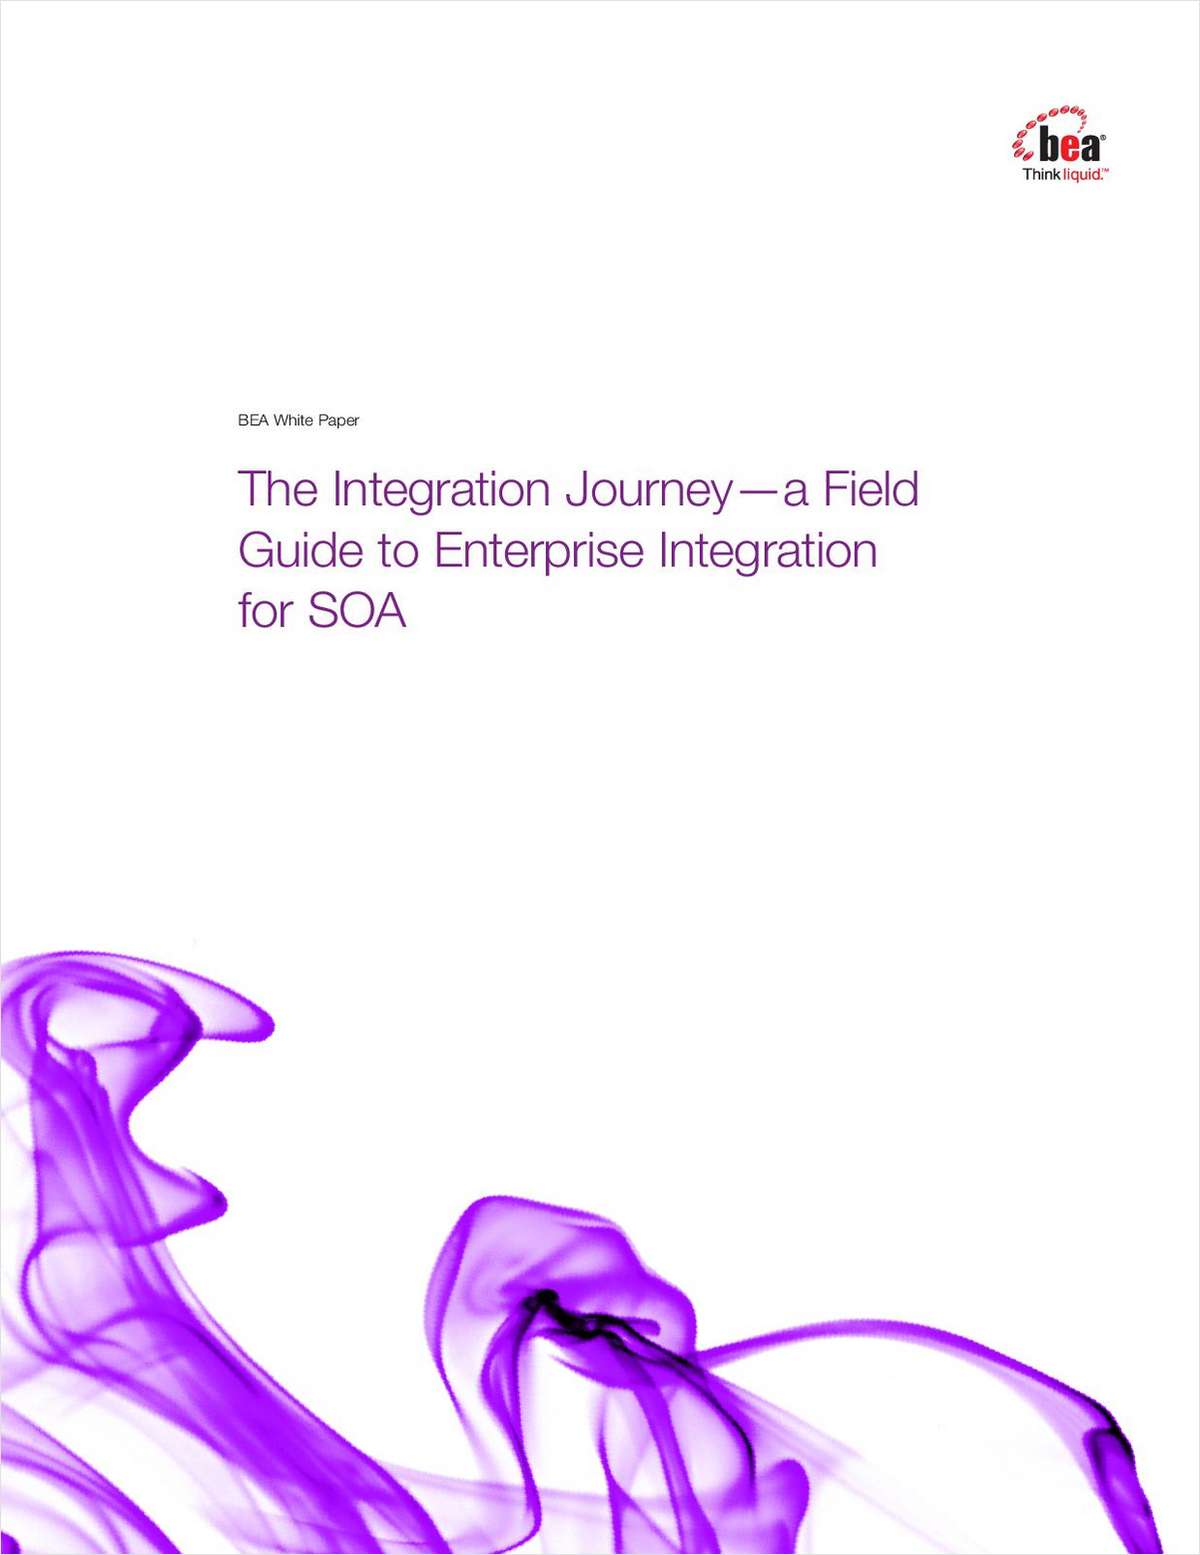 The Integration Journey—a Field Guide to Enterprise Integration for SOA